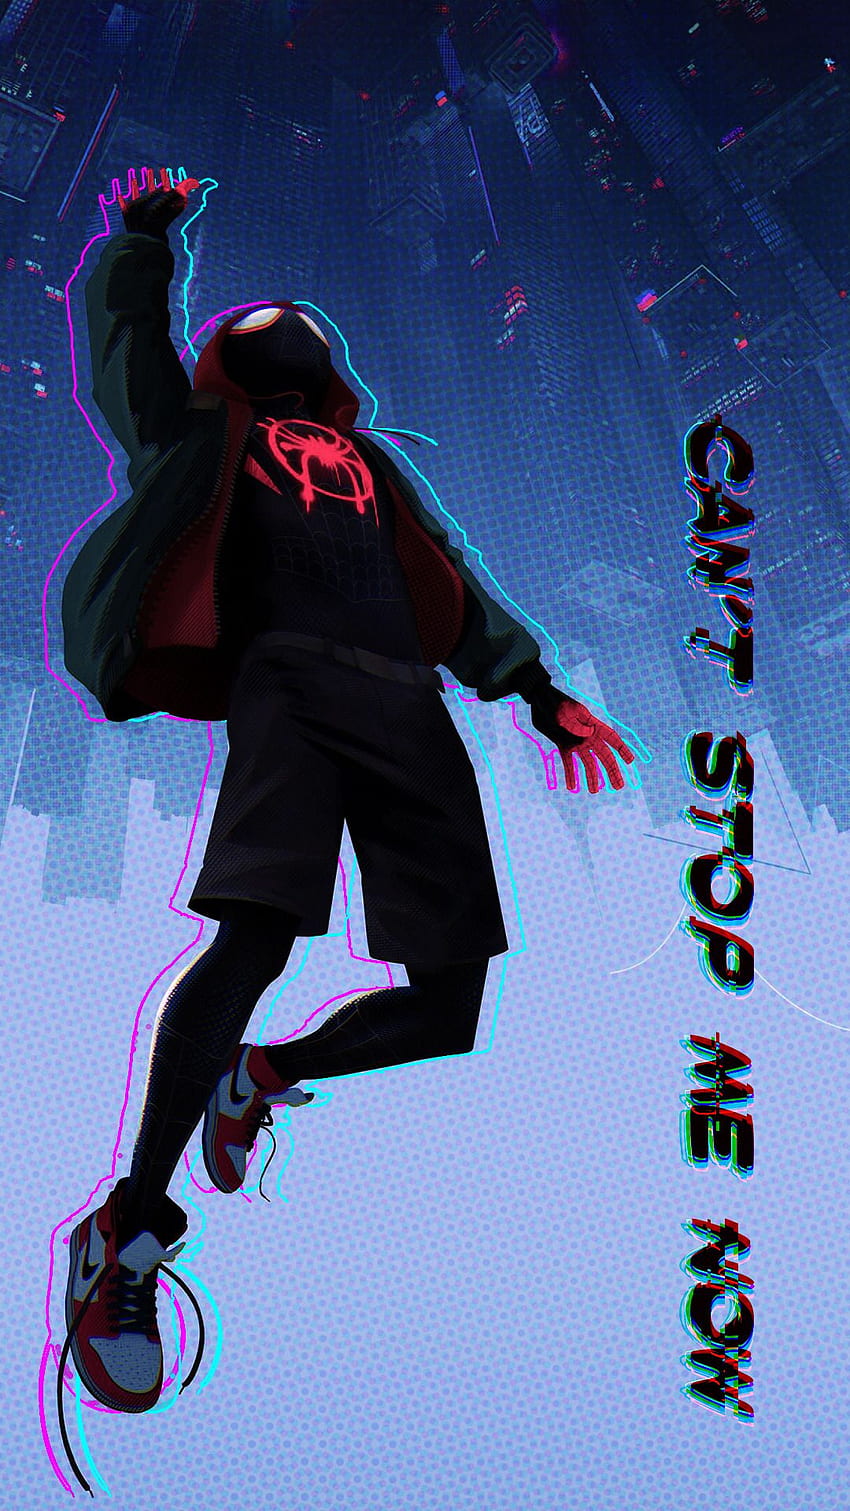 Cyberpunk/retro colour scheme edit of the popular Spiderverse